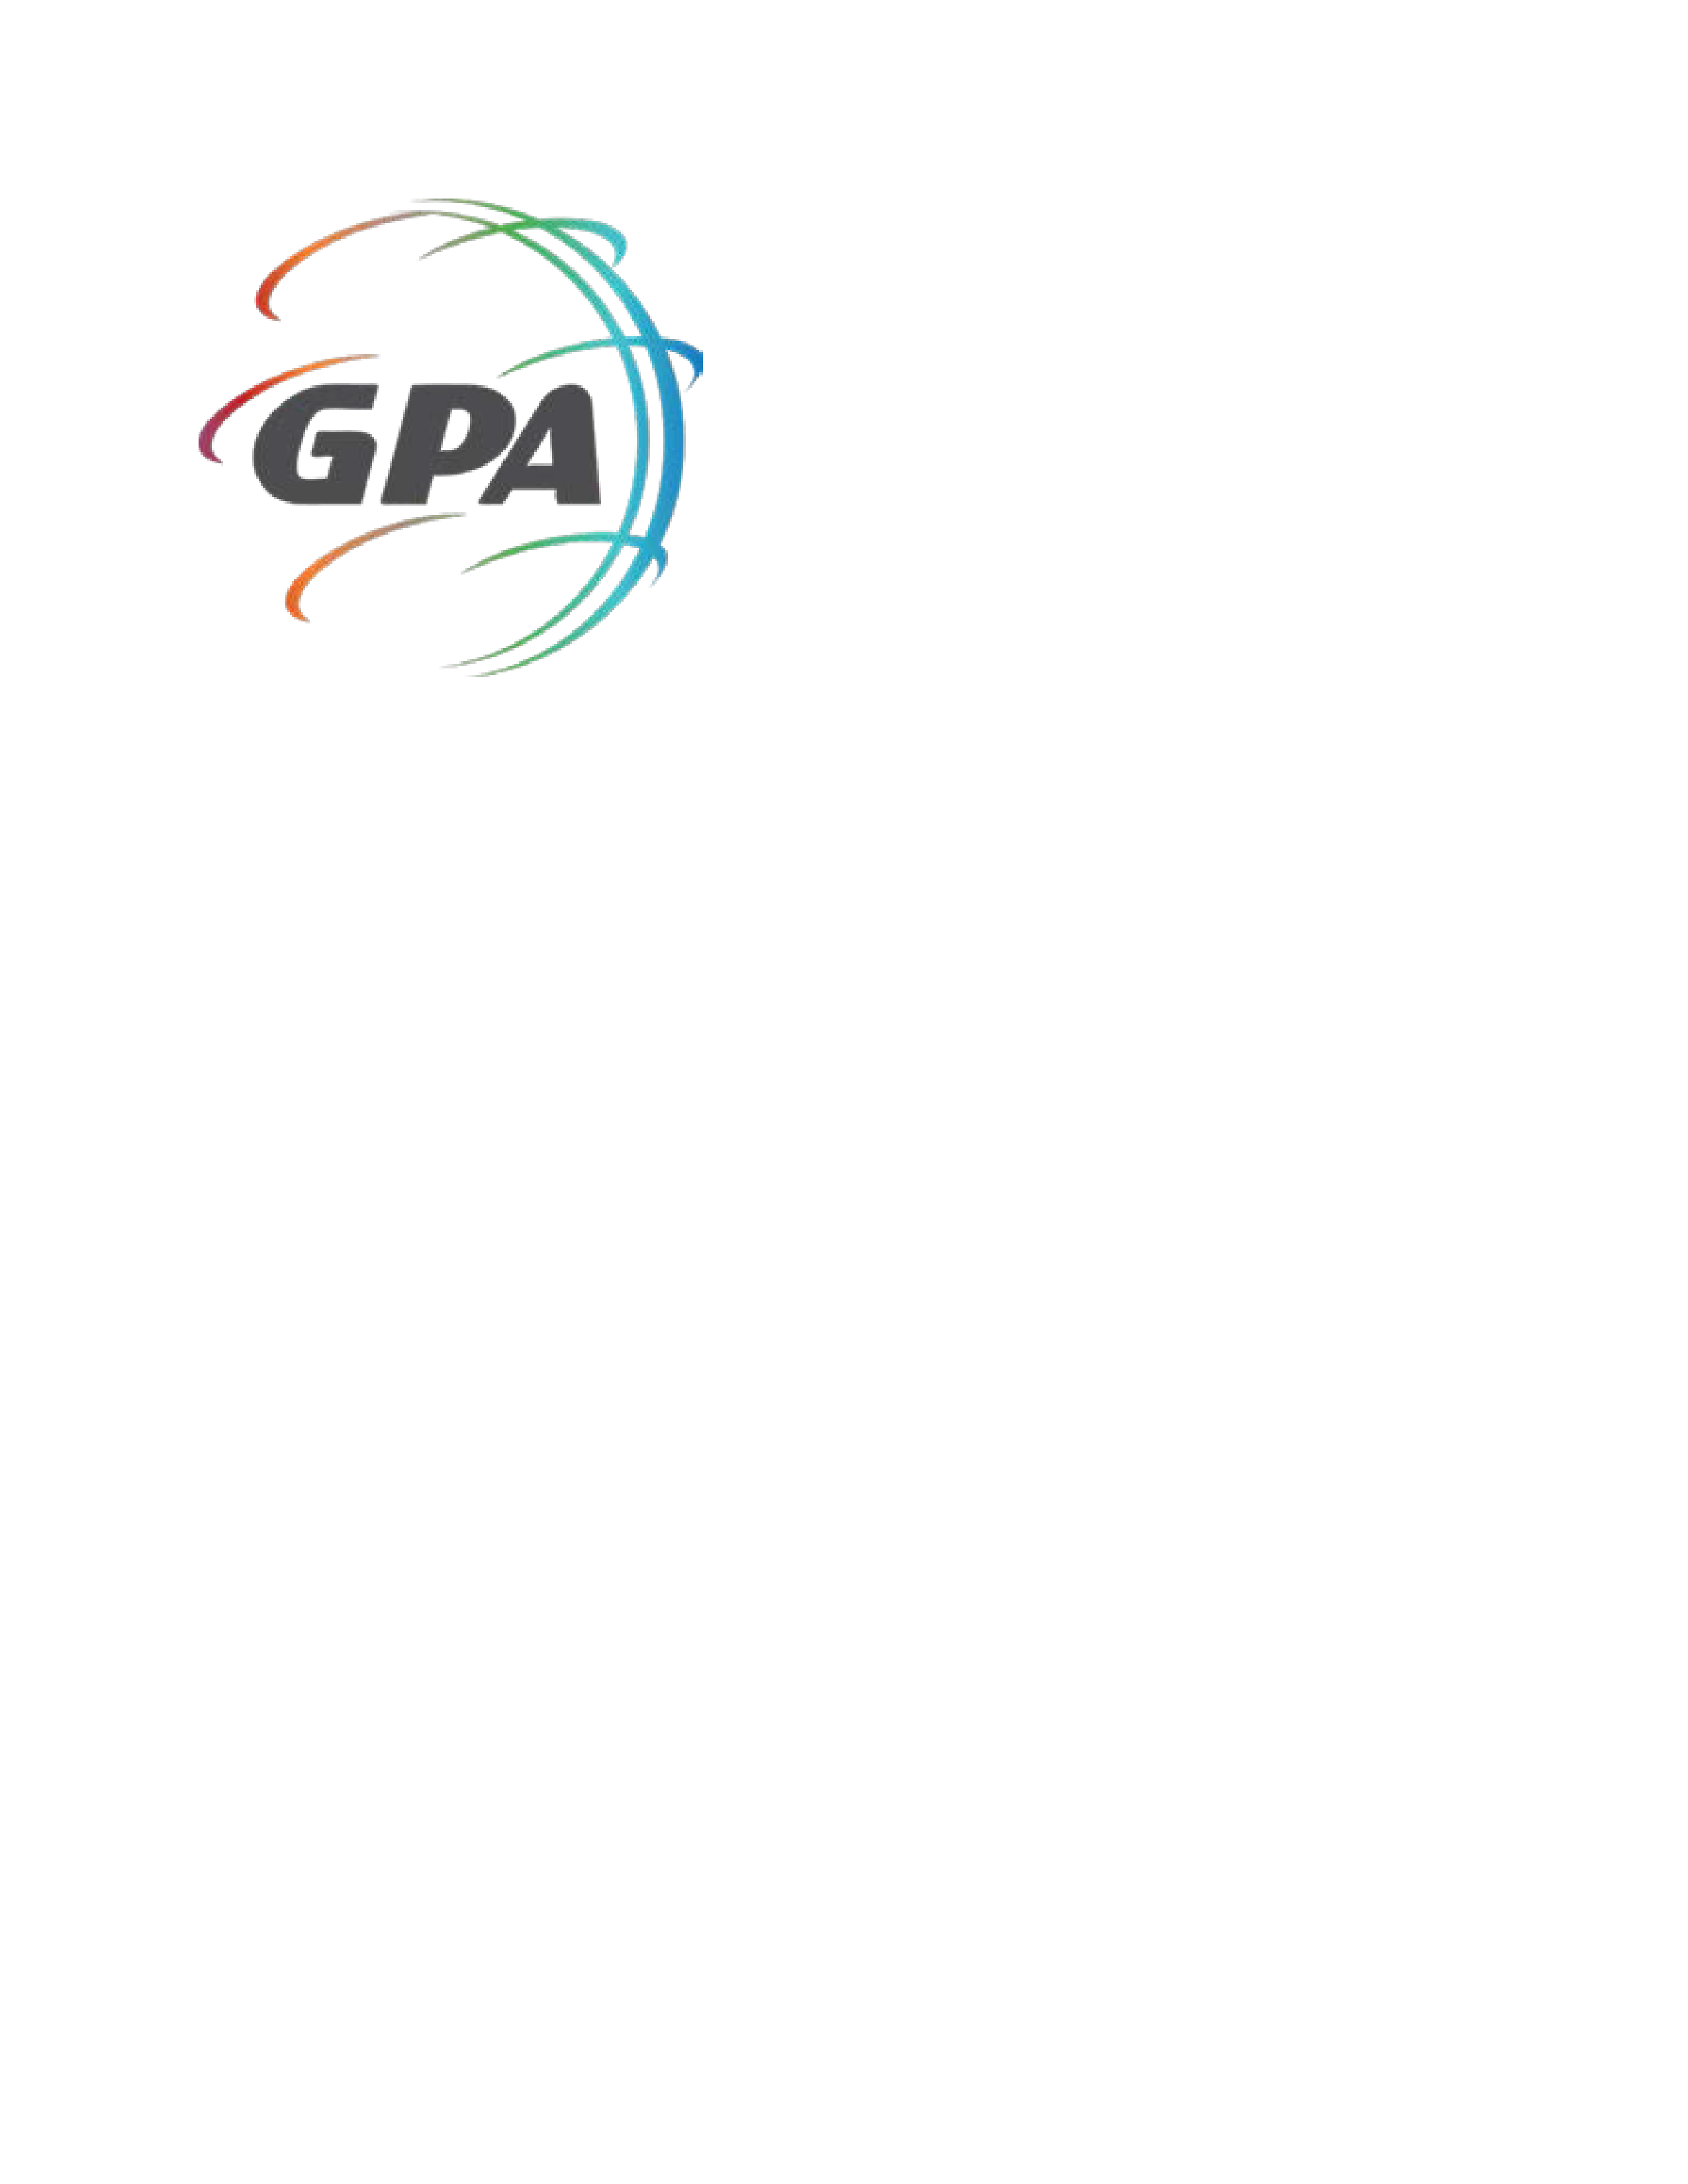 Group & Pension Administrators, Inc., dba GPA Company Logo